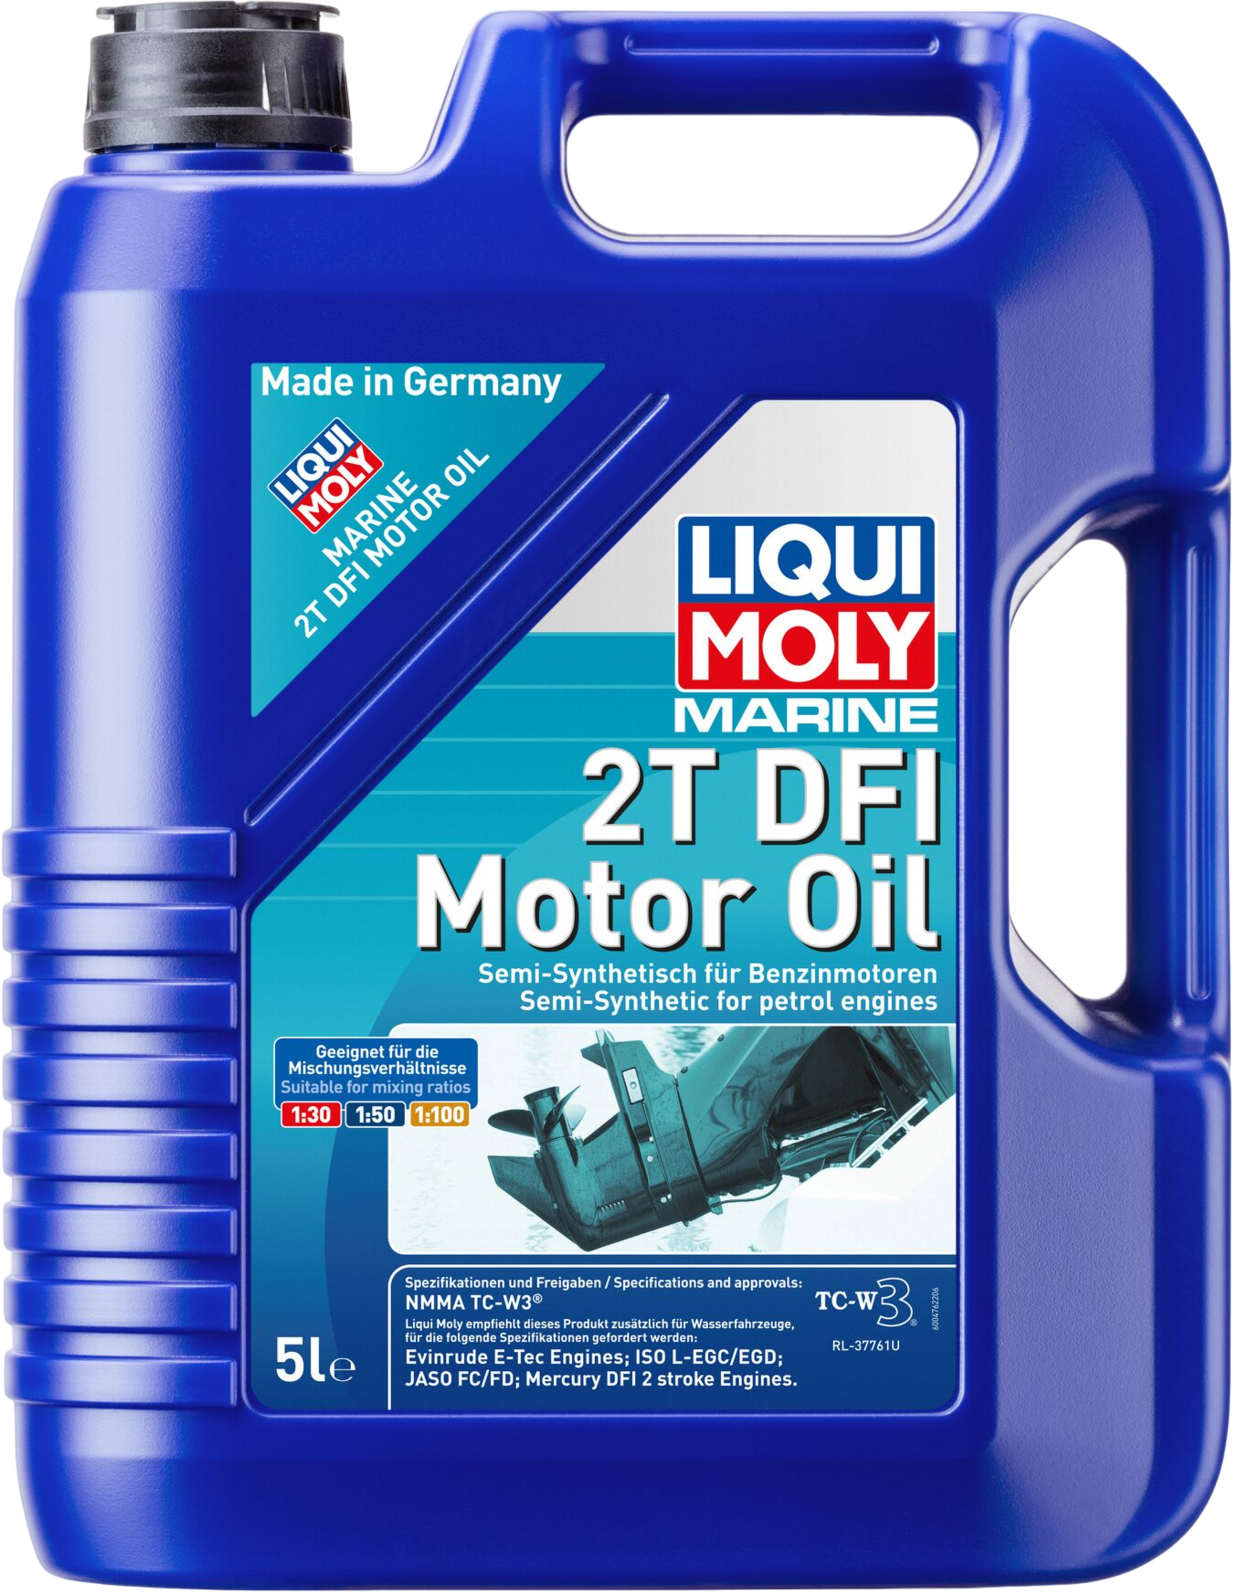 Liqui Moly Marine 2T DFI Motor Oil, 4 x 5 lt detail 2